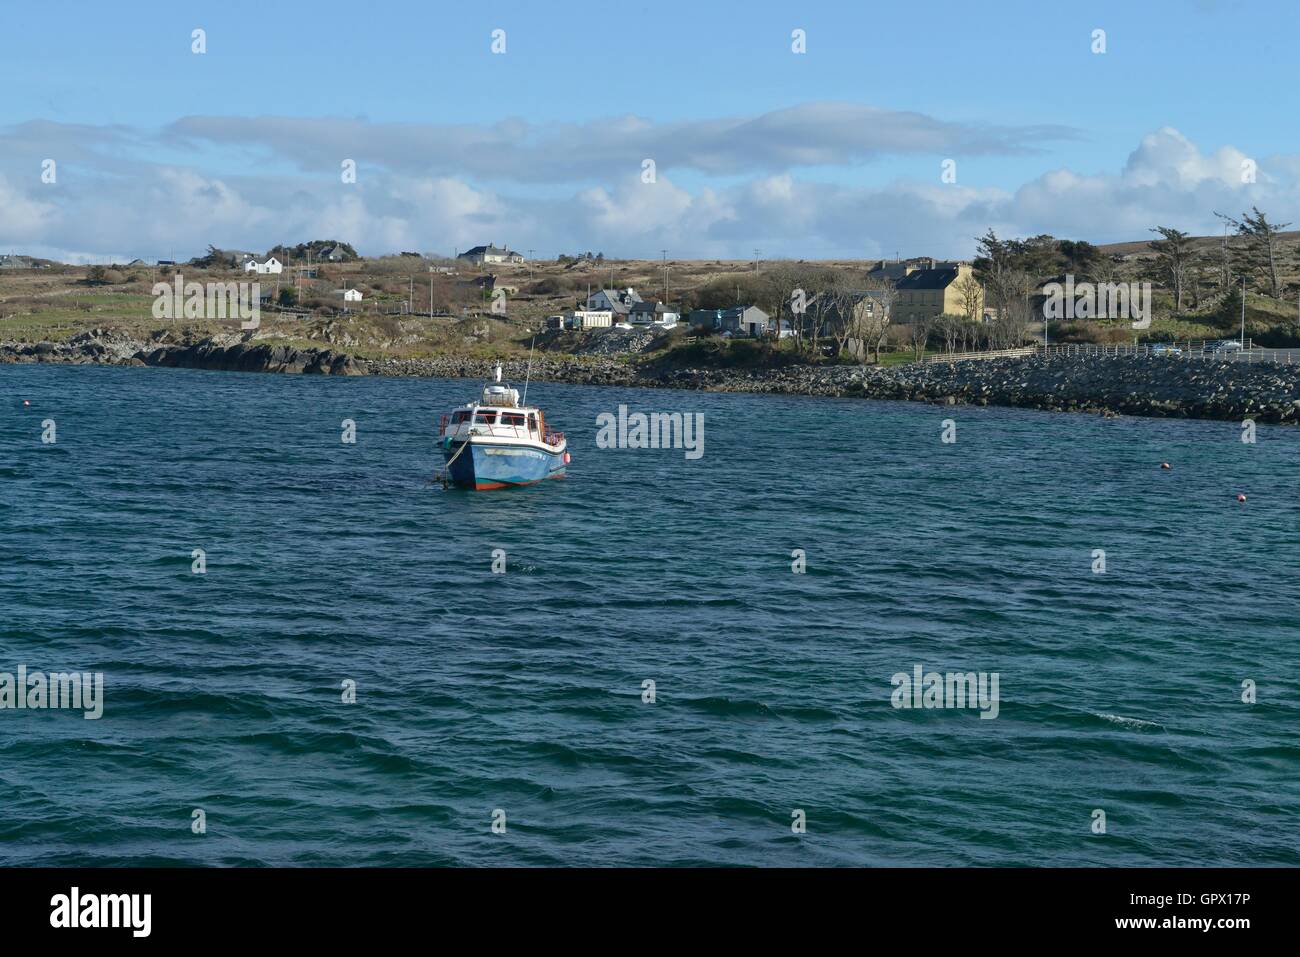 The island of Inishboffin off the coast of Ireland. Île de Inishboffin au large des côtes irlandaises.Het eiland Inishboffin voor de kust van Ierland. Stock Photo